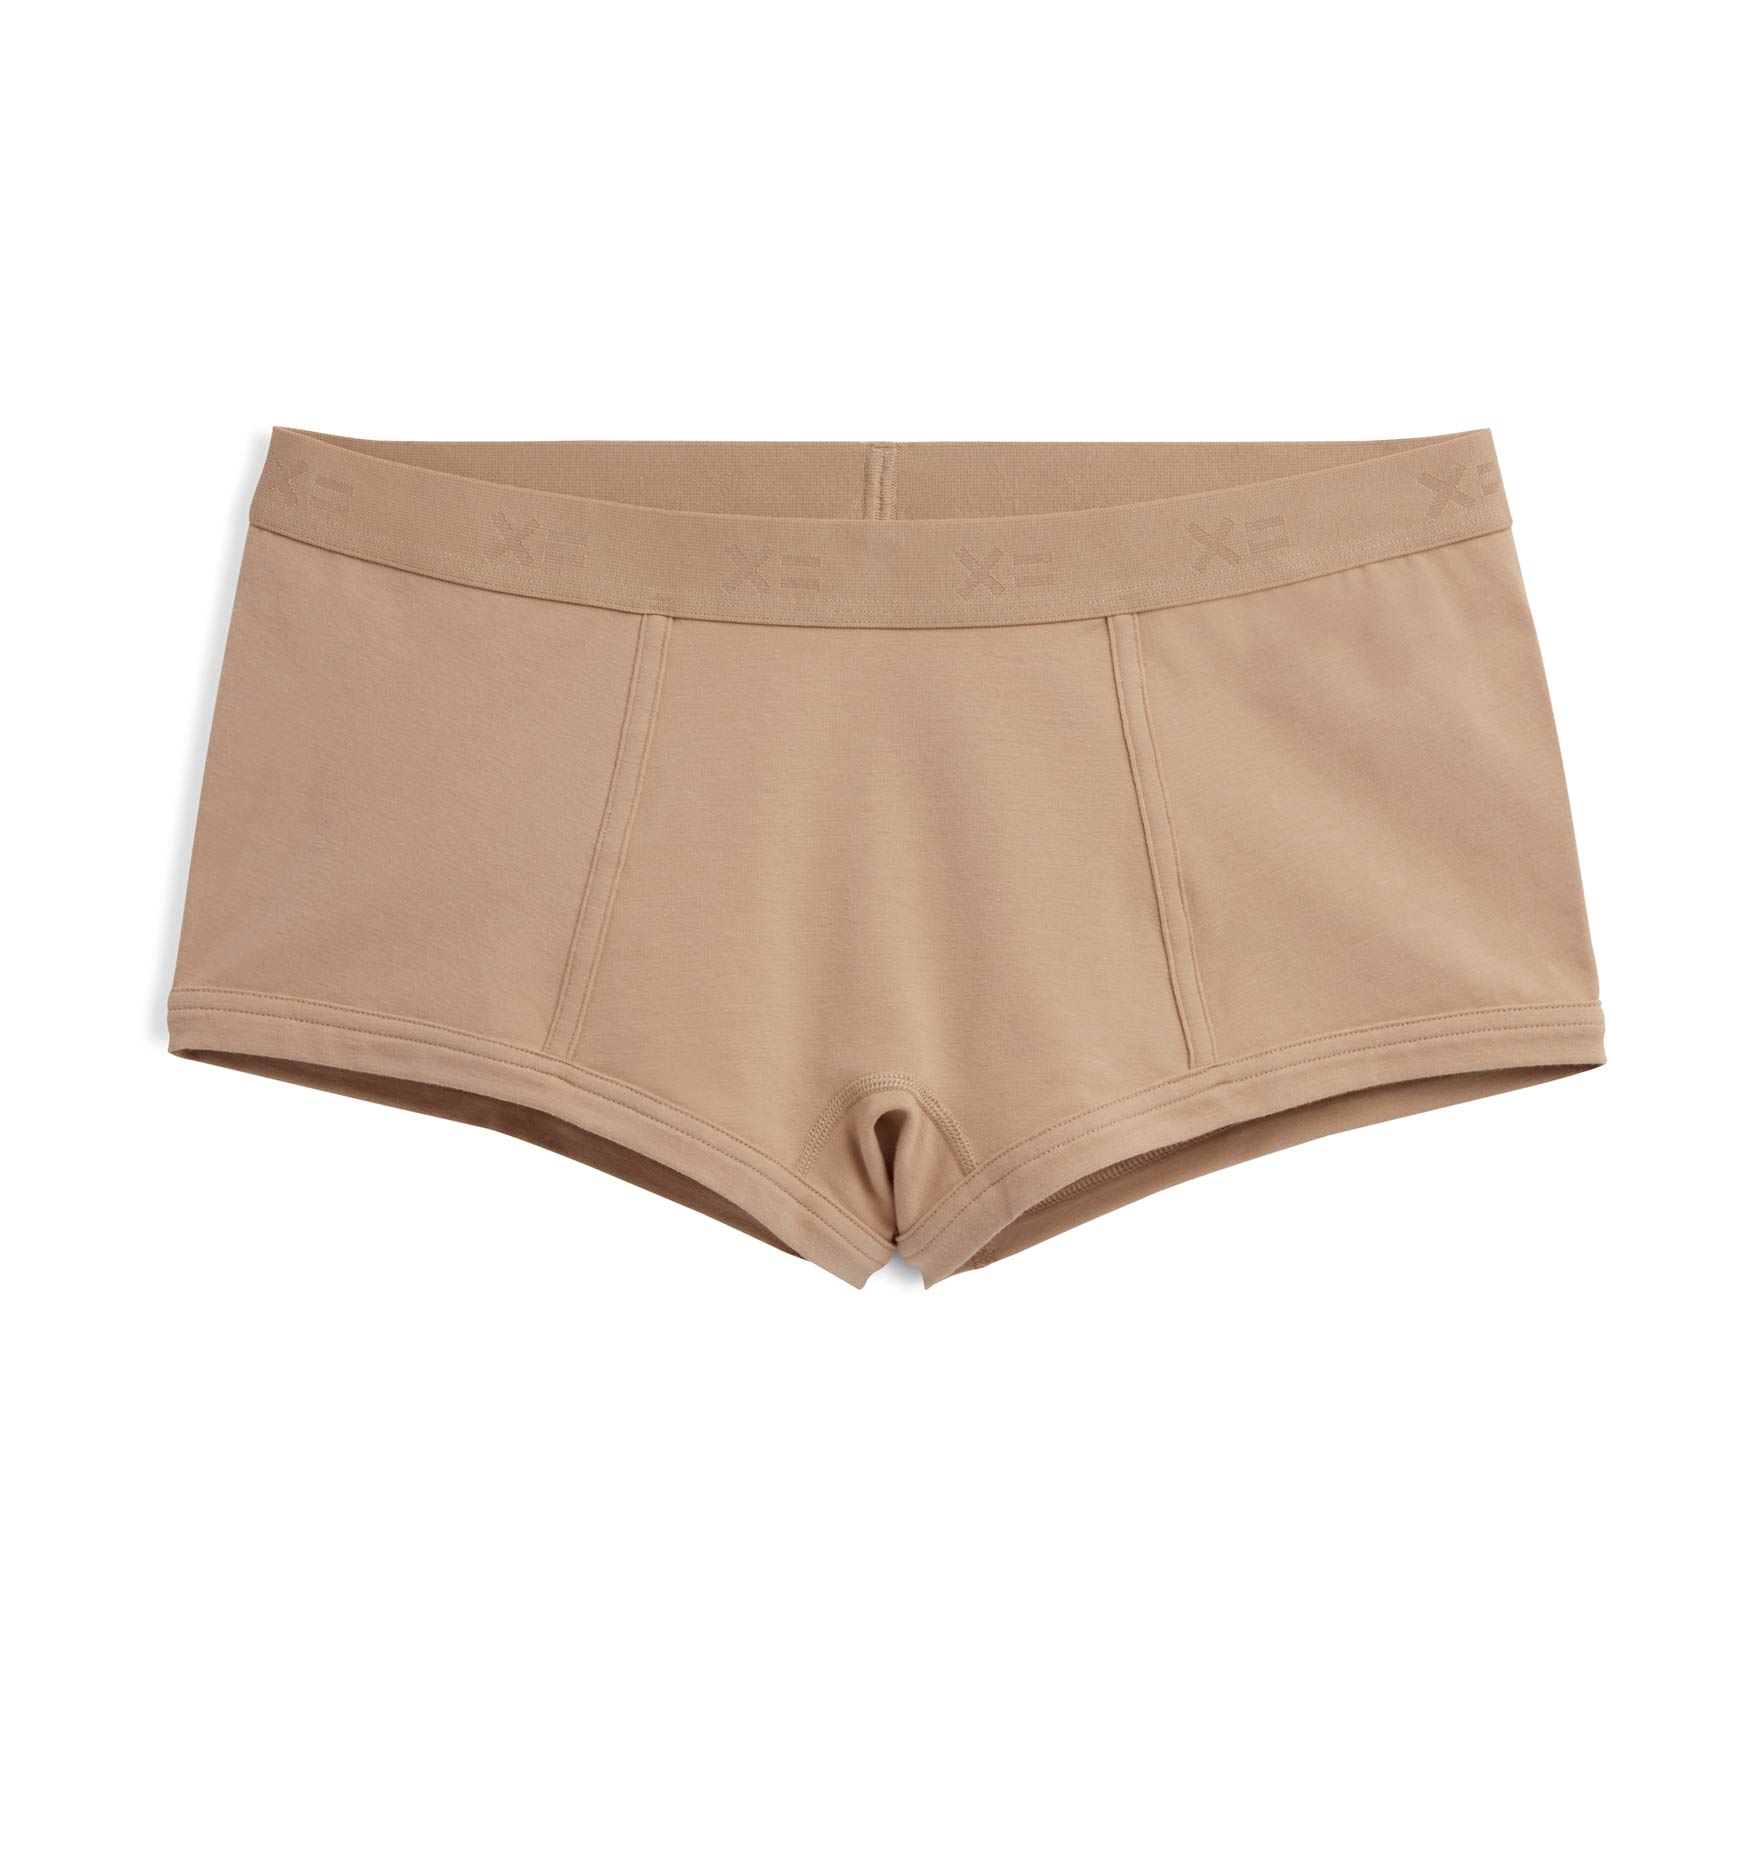 Shop Boy Shorts, Women's Underwear